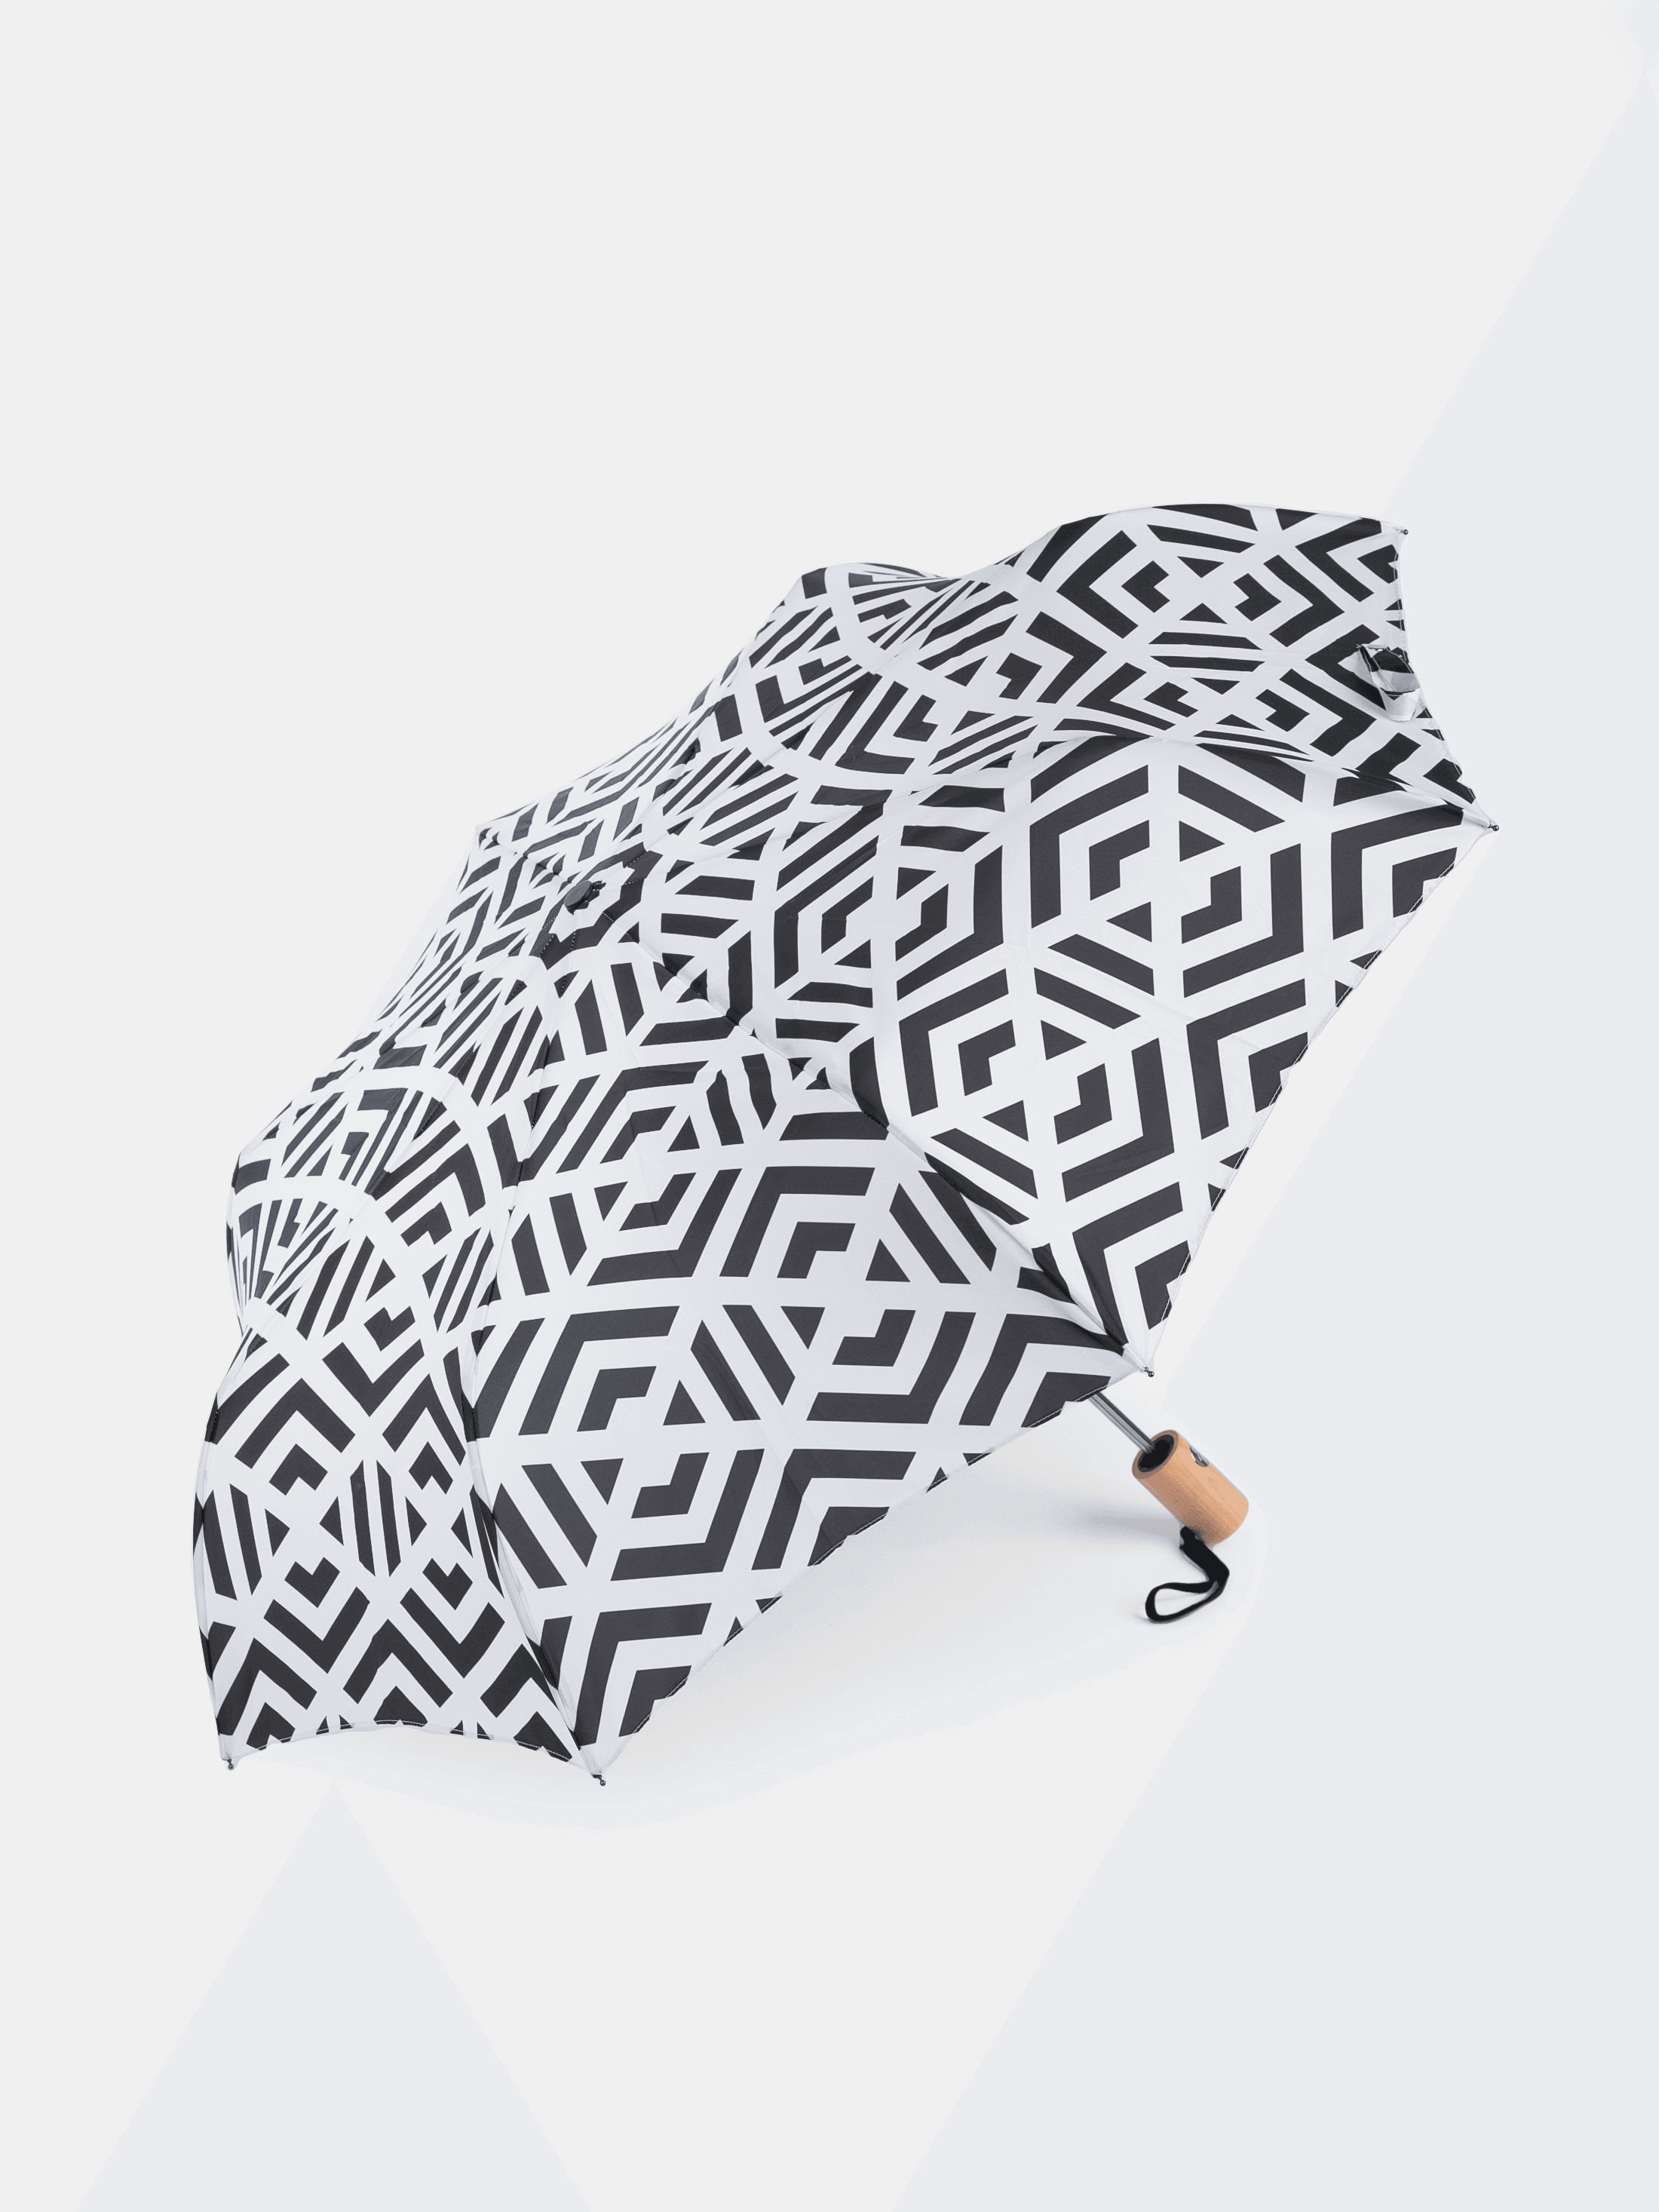 print on demand umbrellas uk